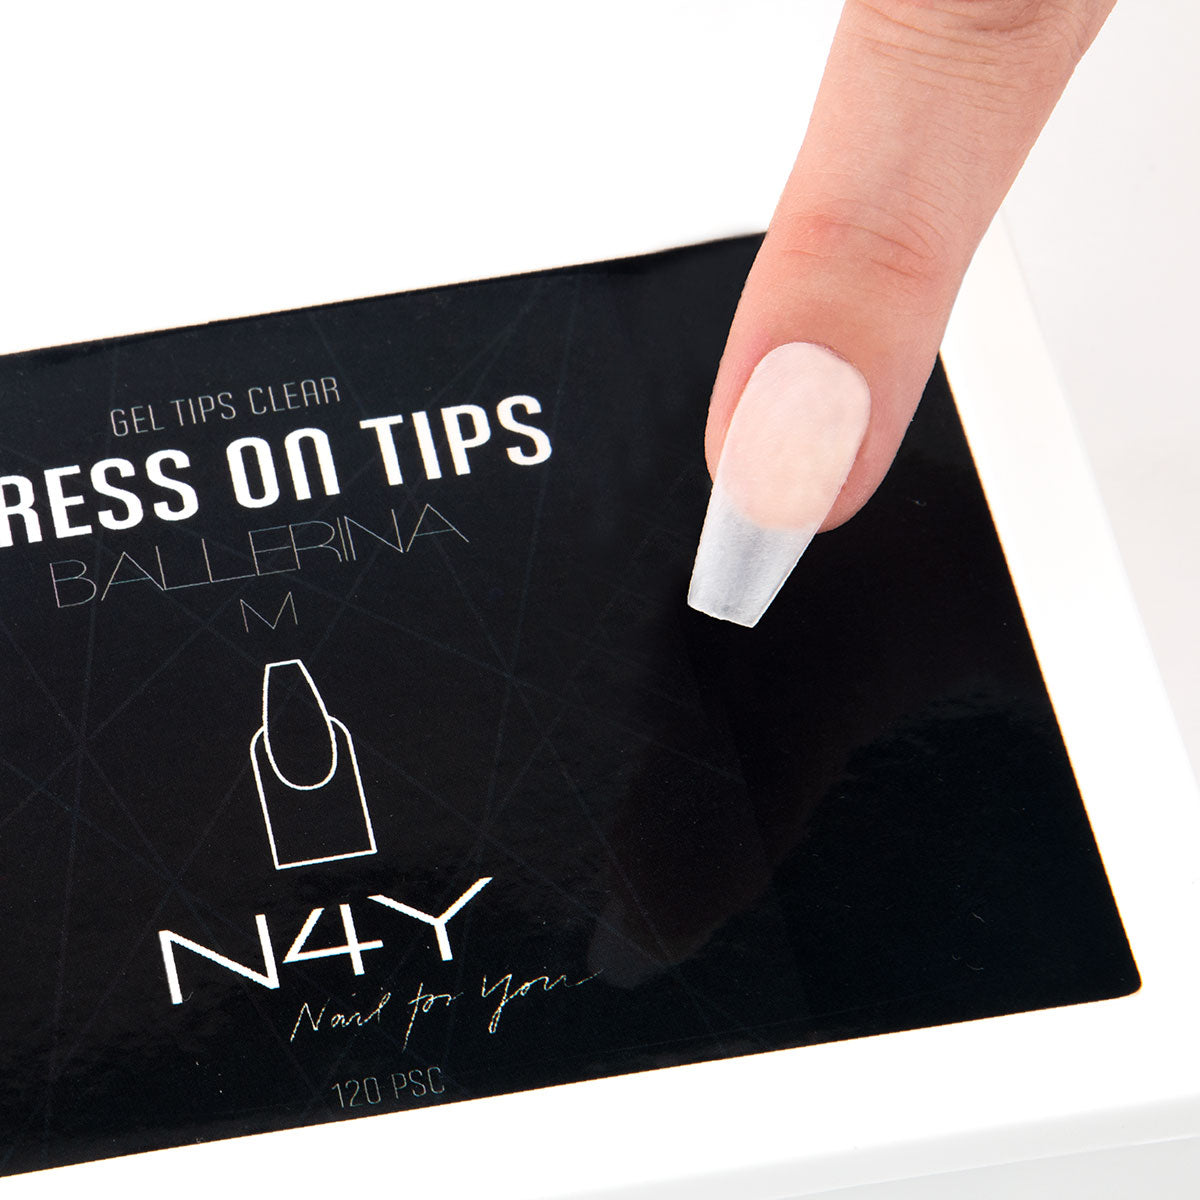 N4Y Press On Tips - Ballerina Clear